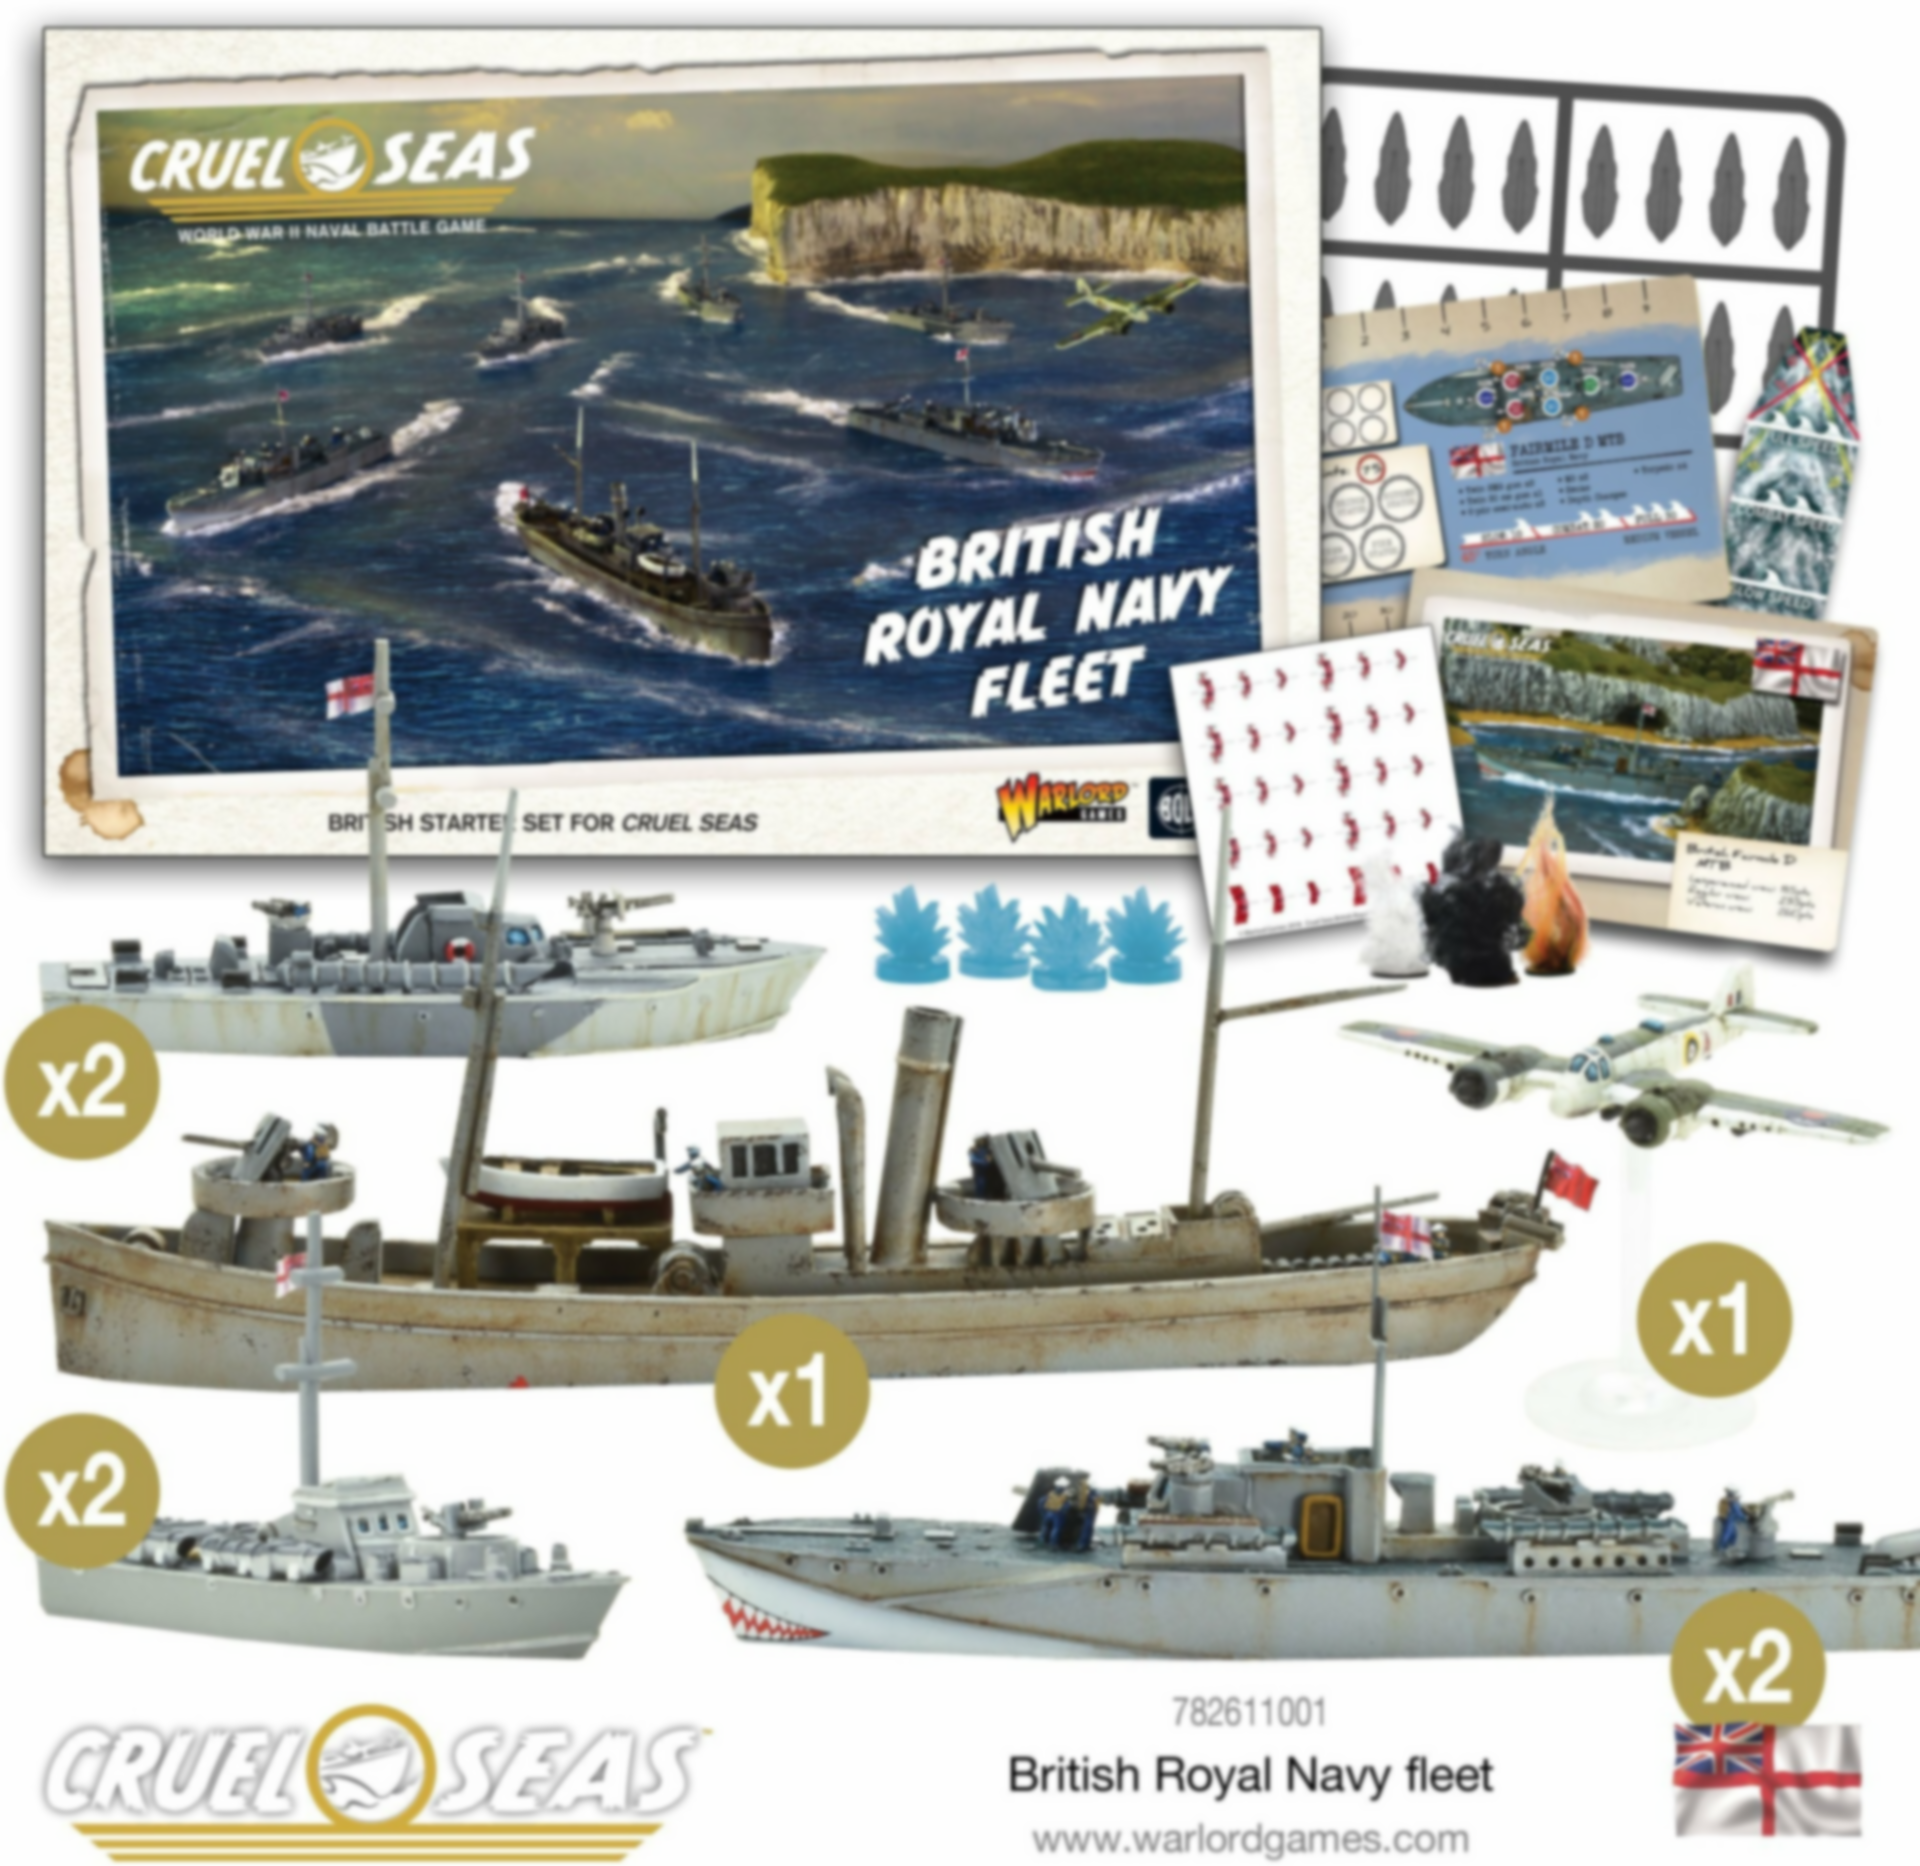 Cruel Seas: British Royal Navy Fleet components